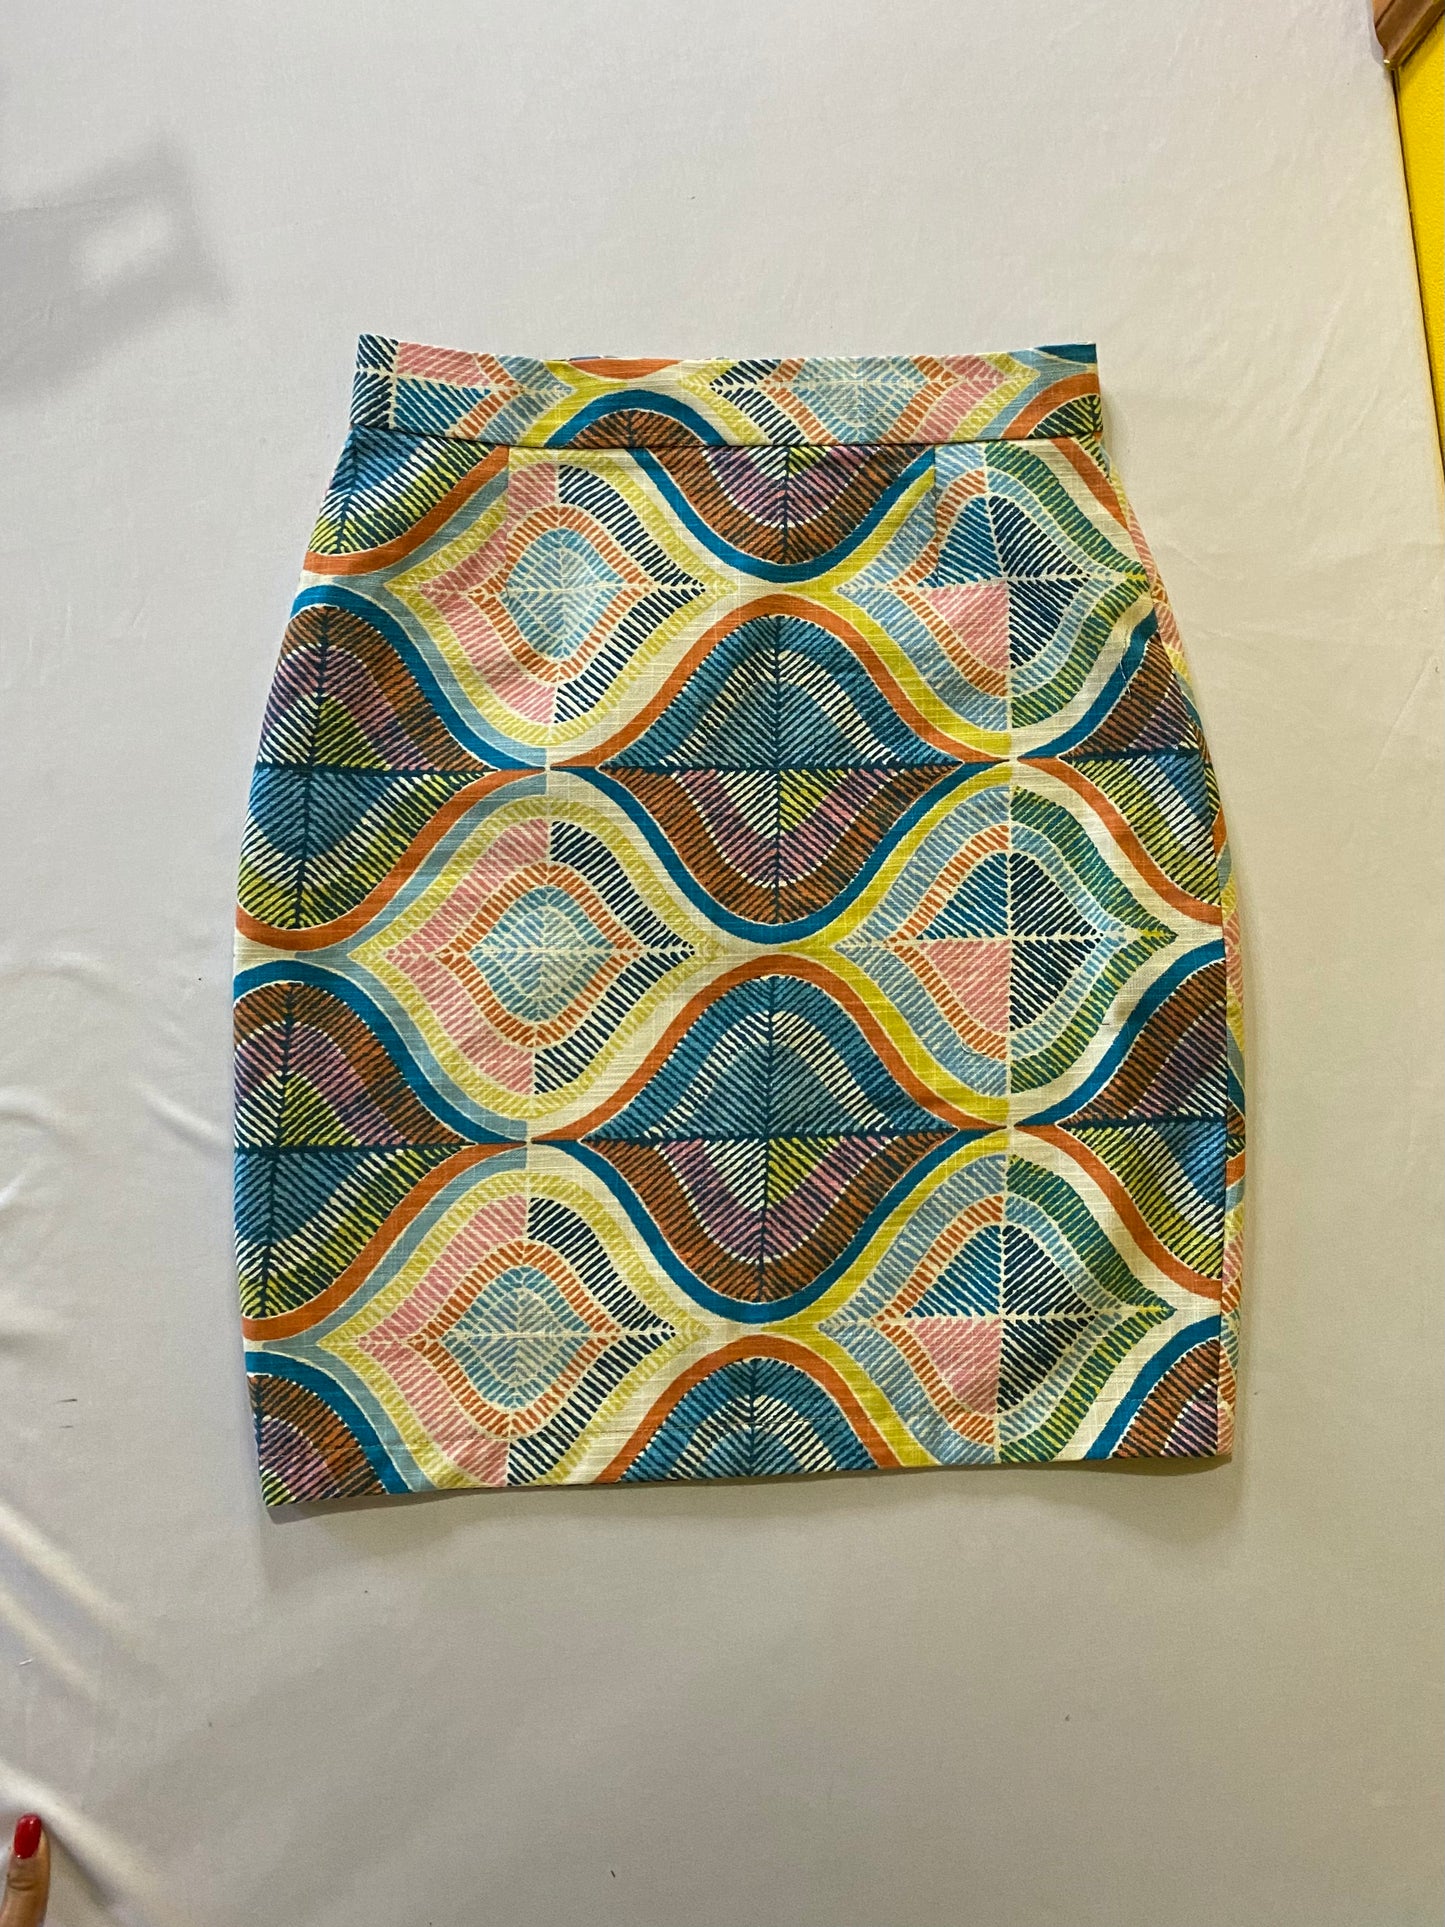 z | SQ006: A-Line Skirt PDF Sewing Pattern